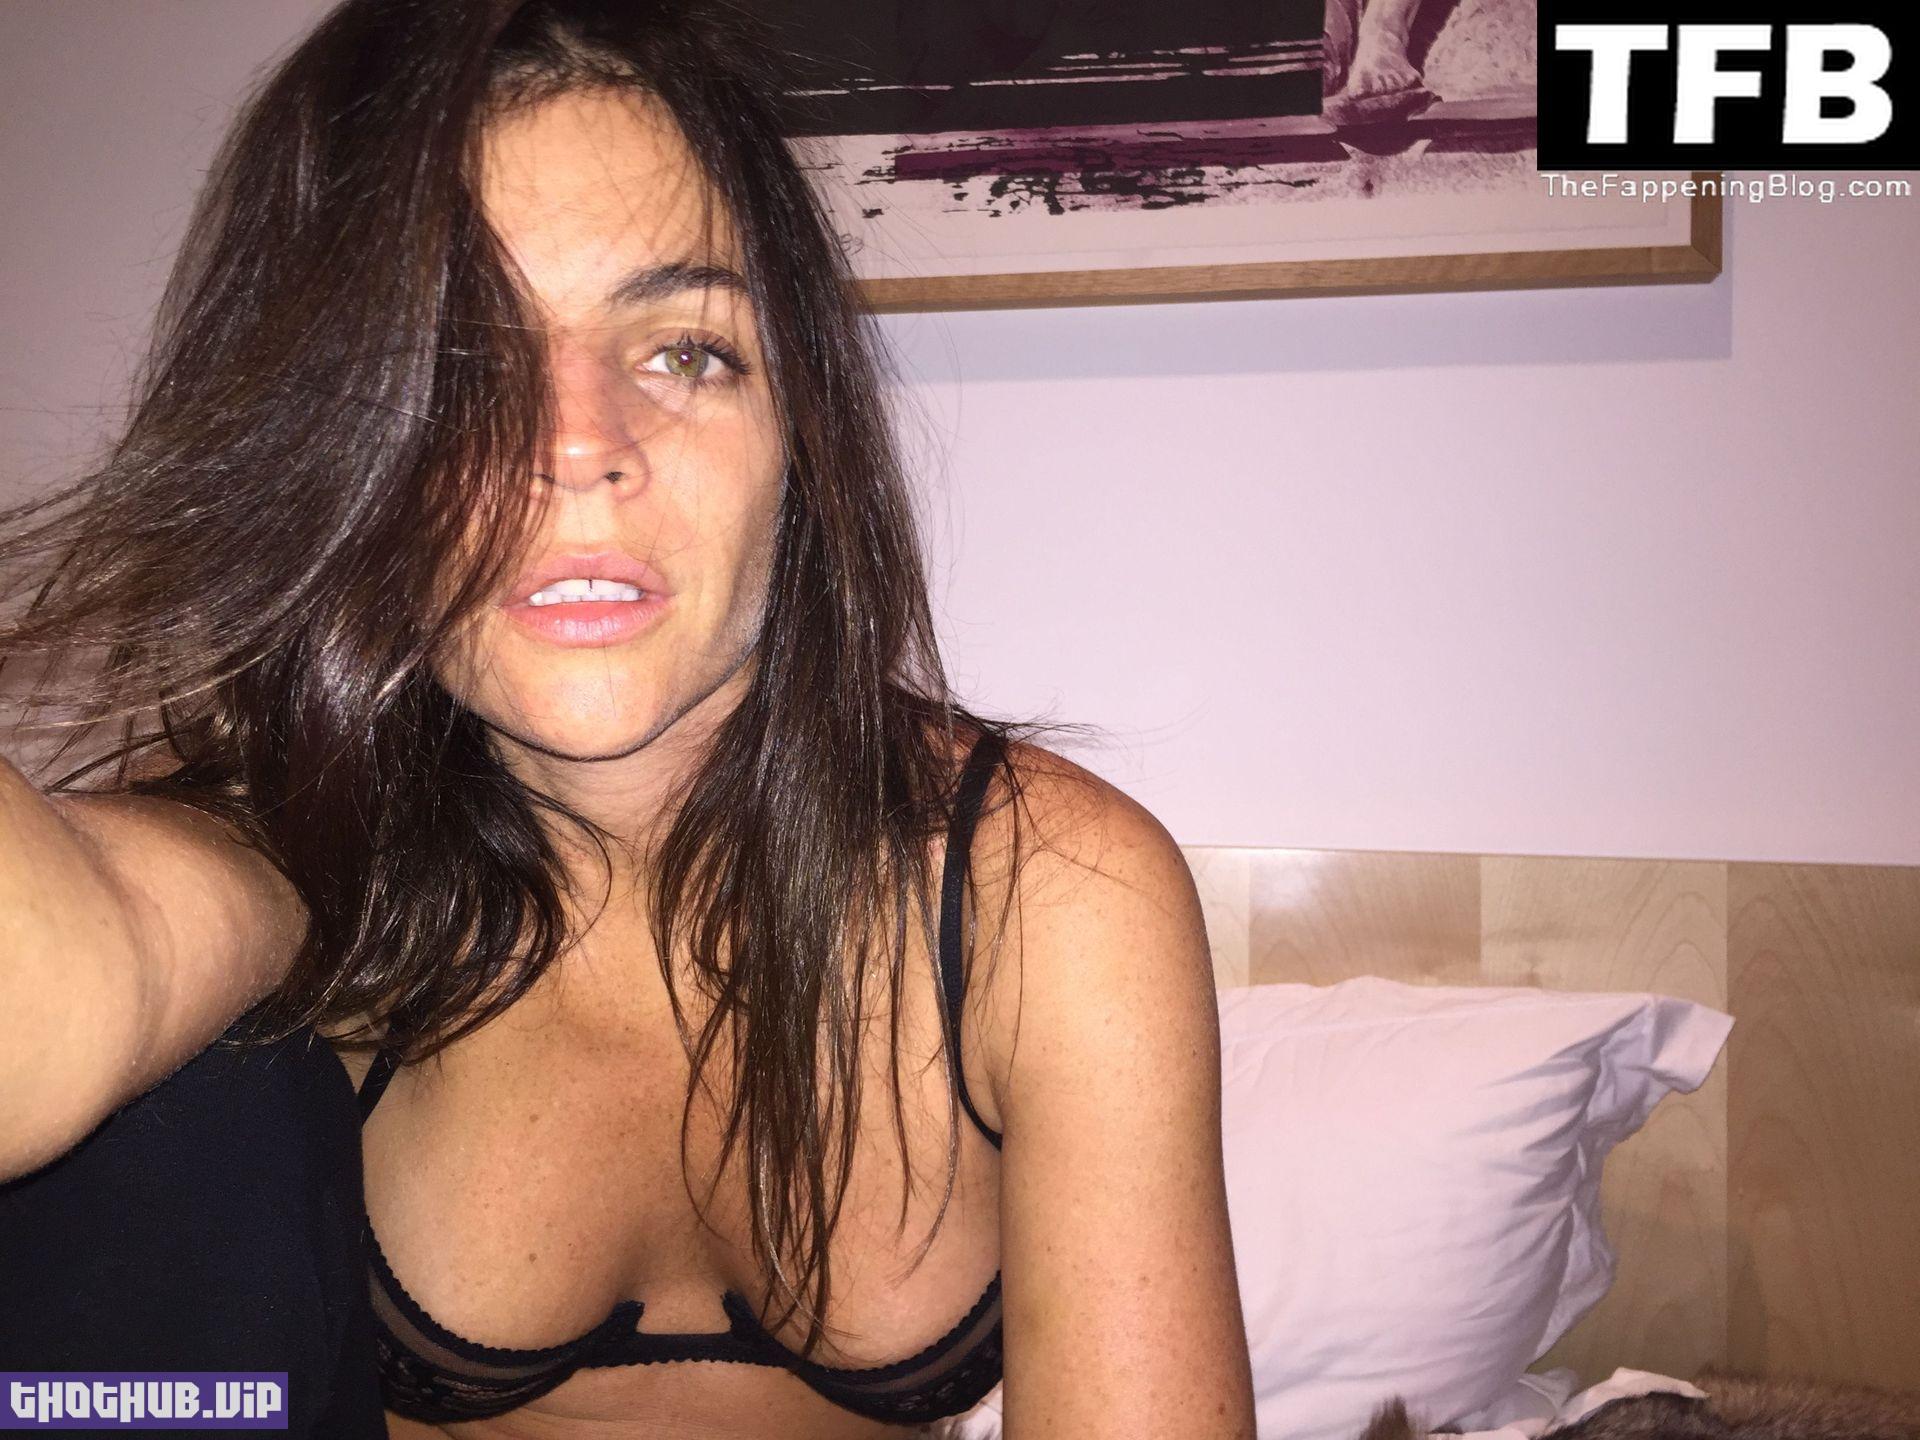 Morgana Balzarotti Nude Sexy Leaked The Fappening Blog 15 1